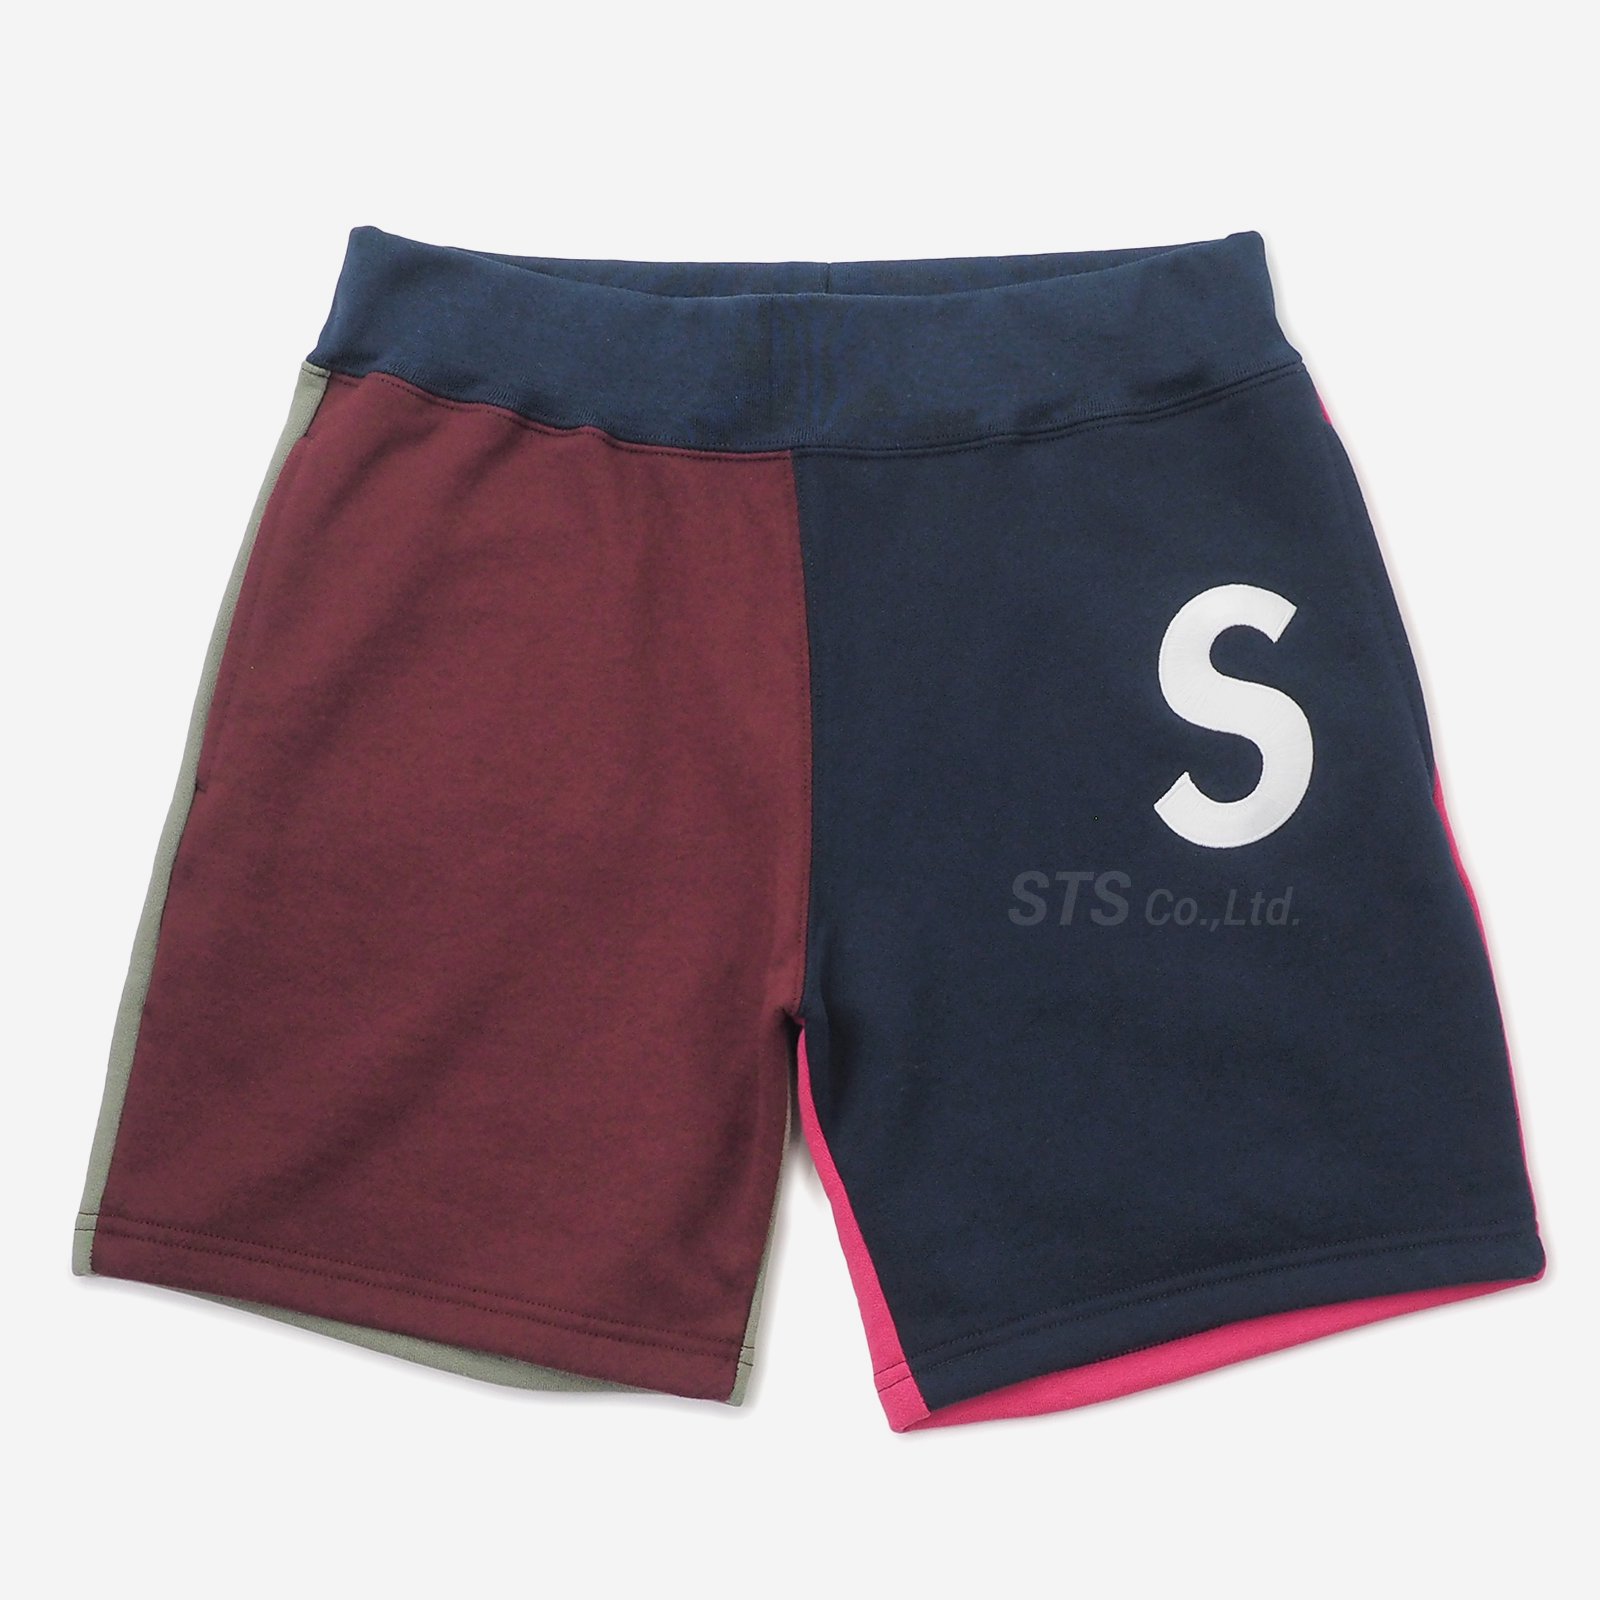 Supreme - S Logo Colorblocked Sweatshort - UG.SHAFT